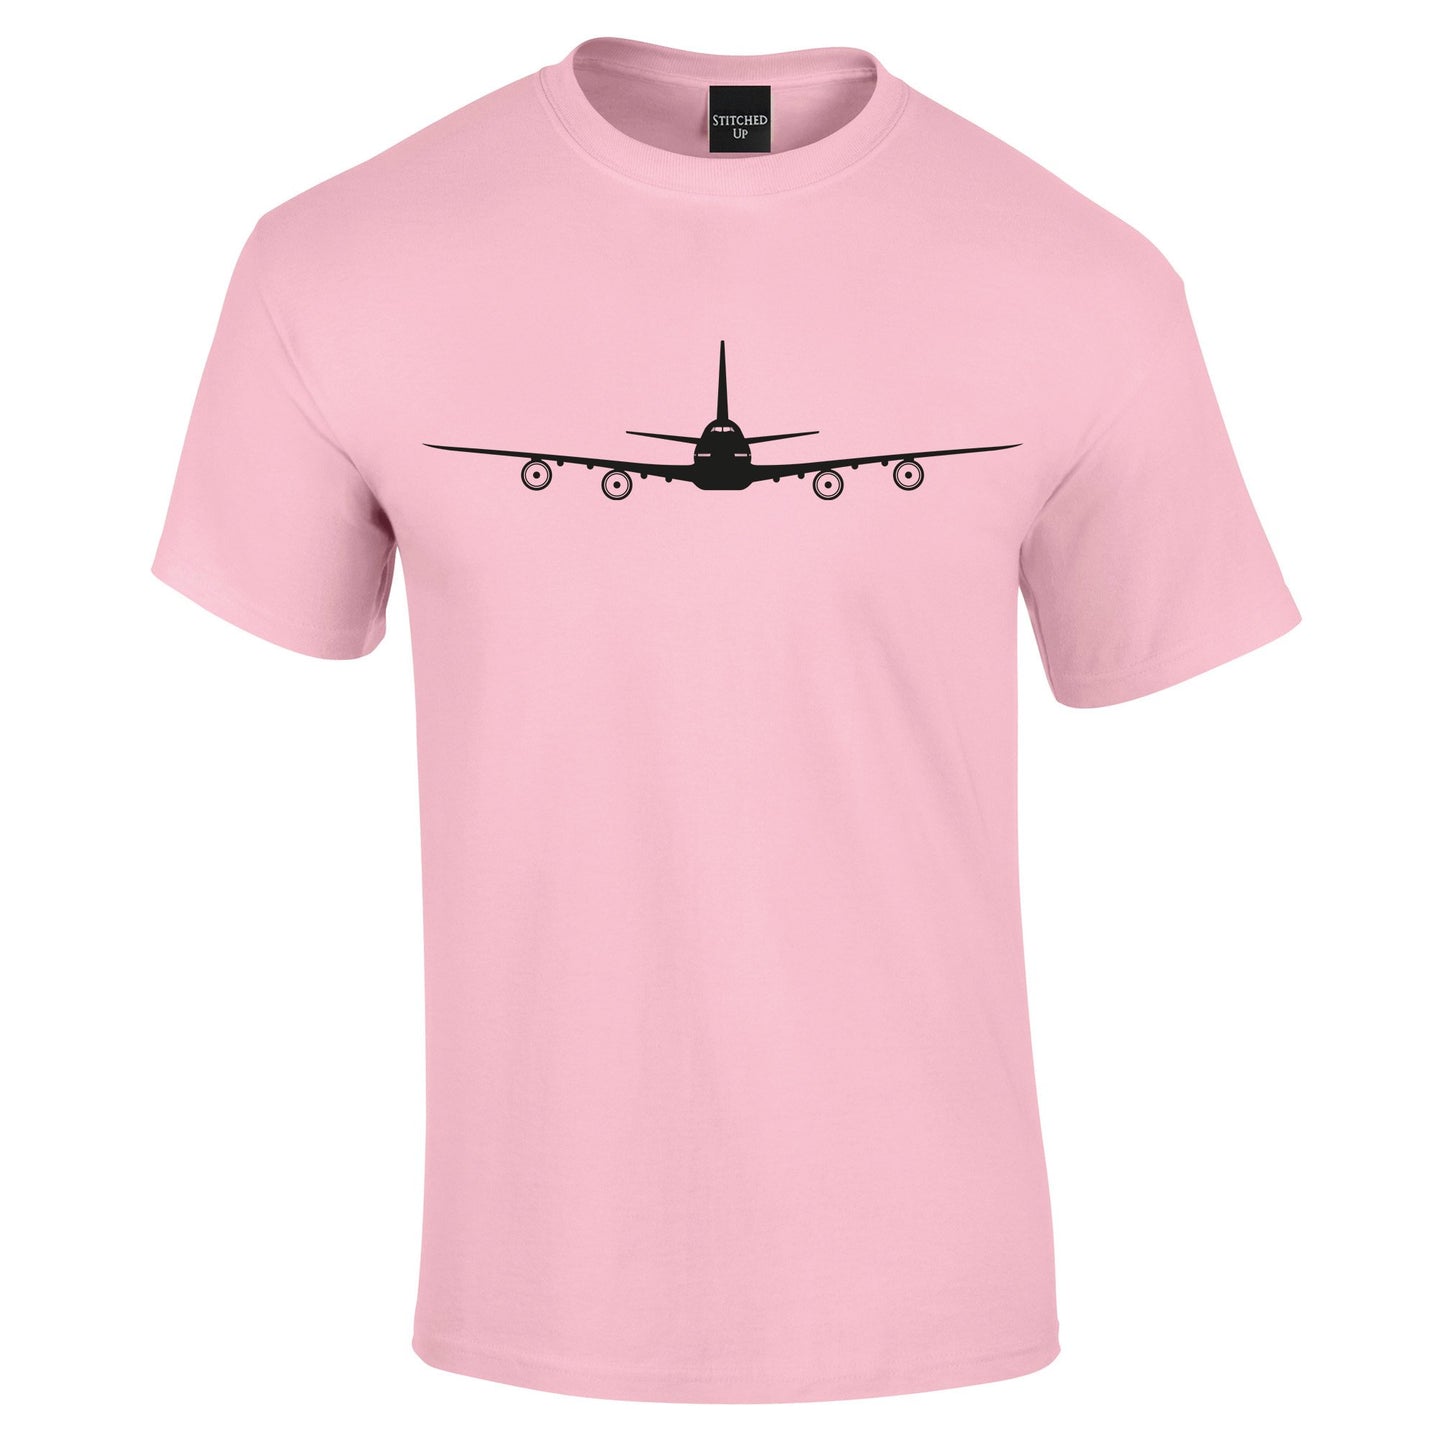 Boeing 747-800 Silhouette T-Shirt